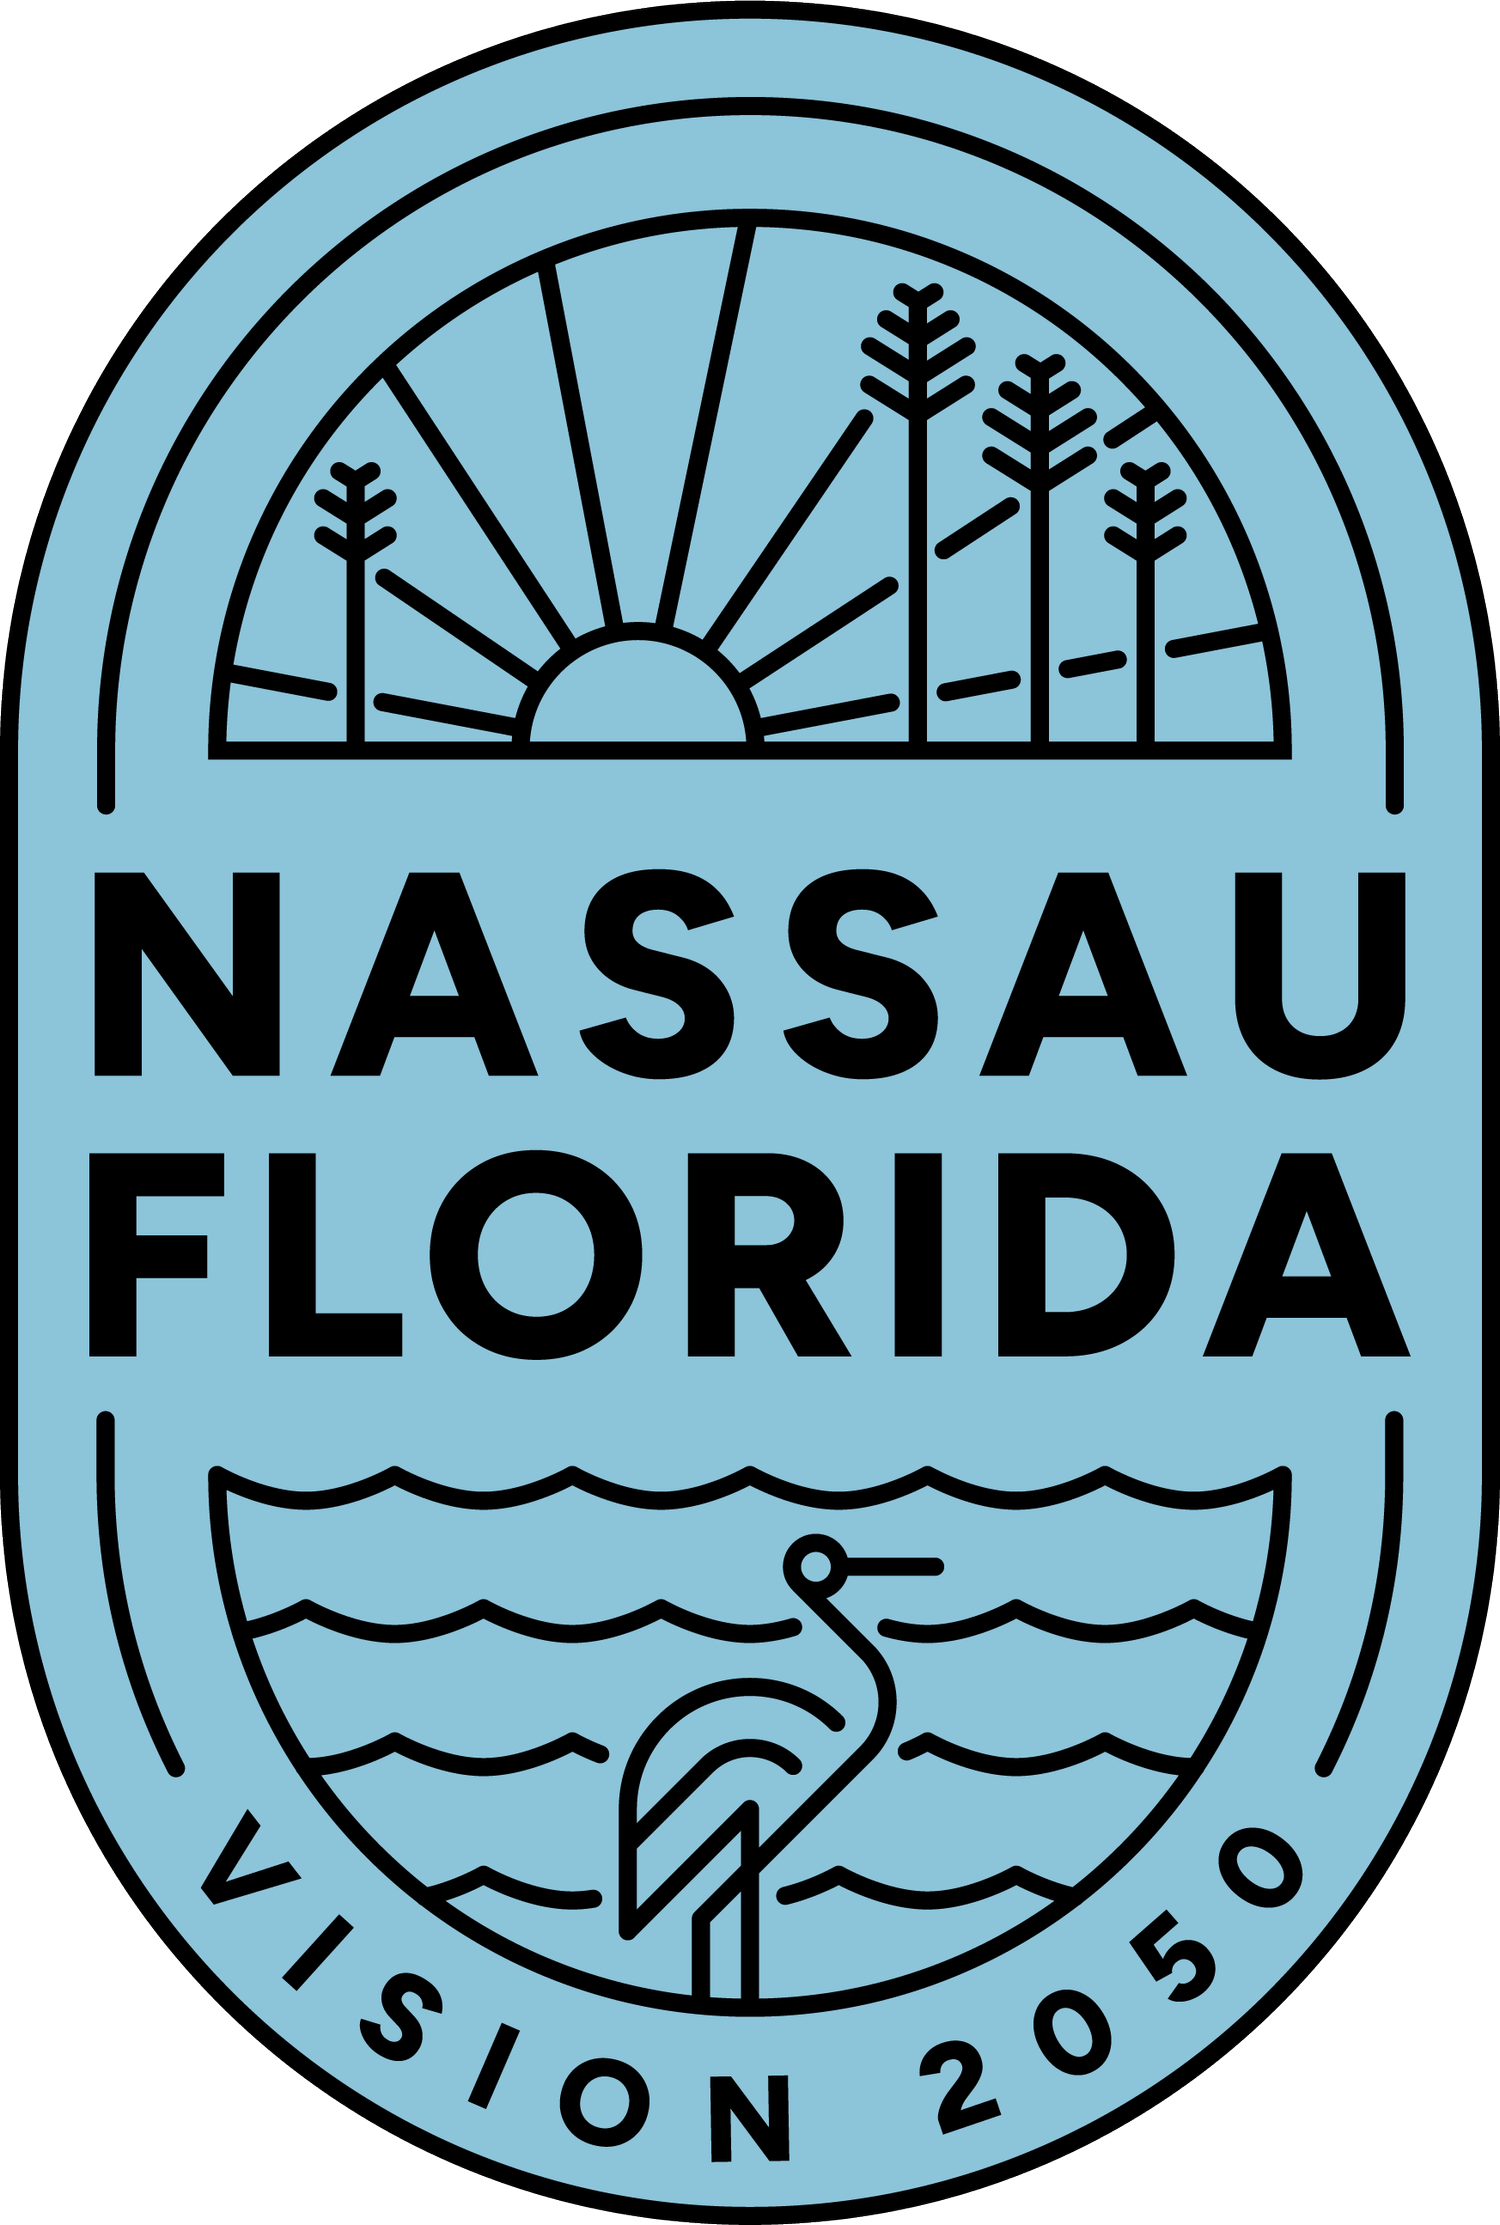 Nassau Florida 2050 Vision